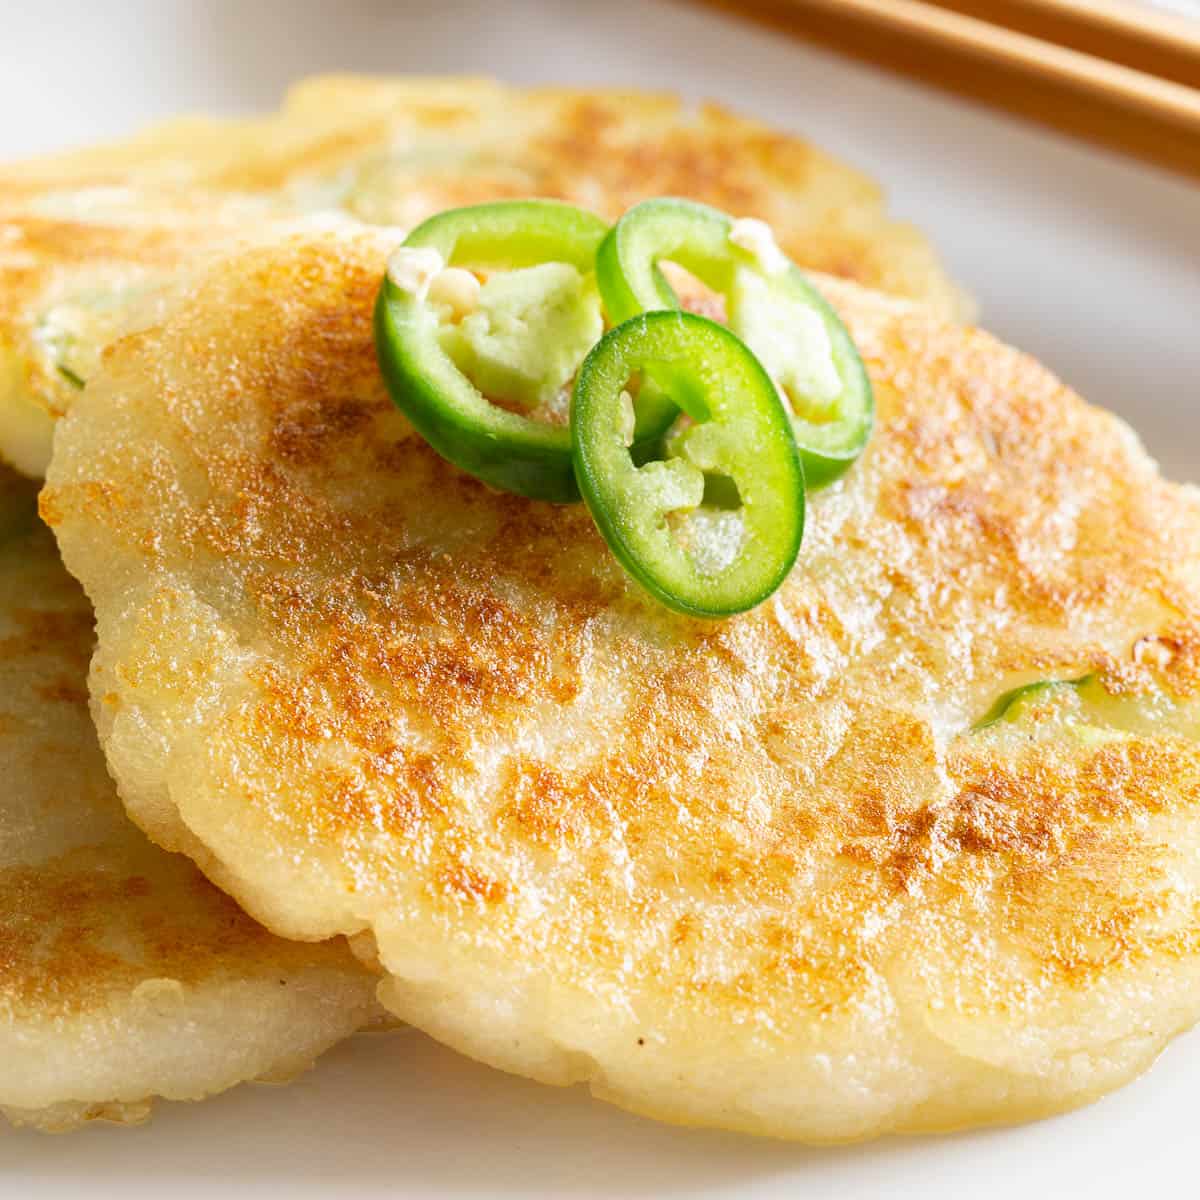 Crispy Korean potato pancakes topped with slivers of green chilli.